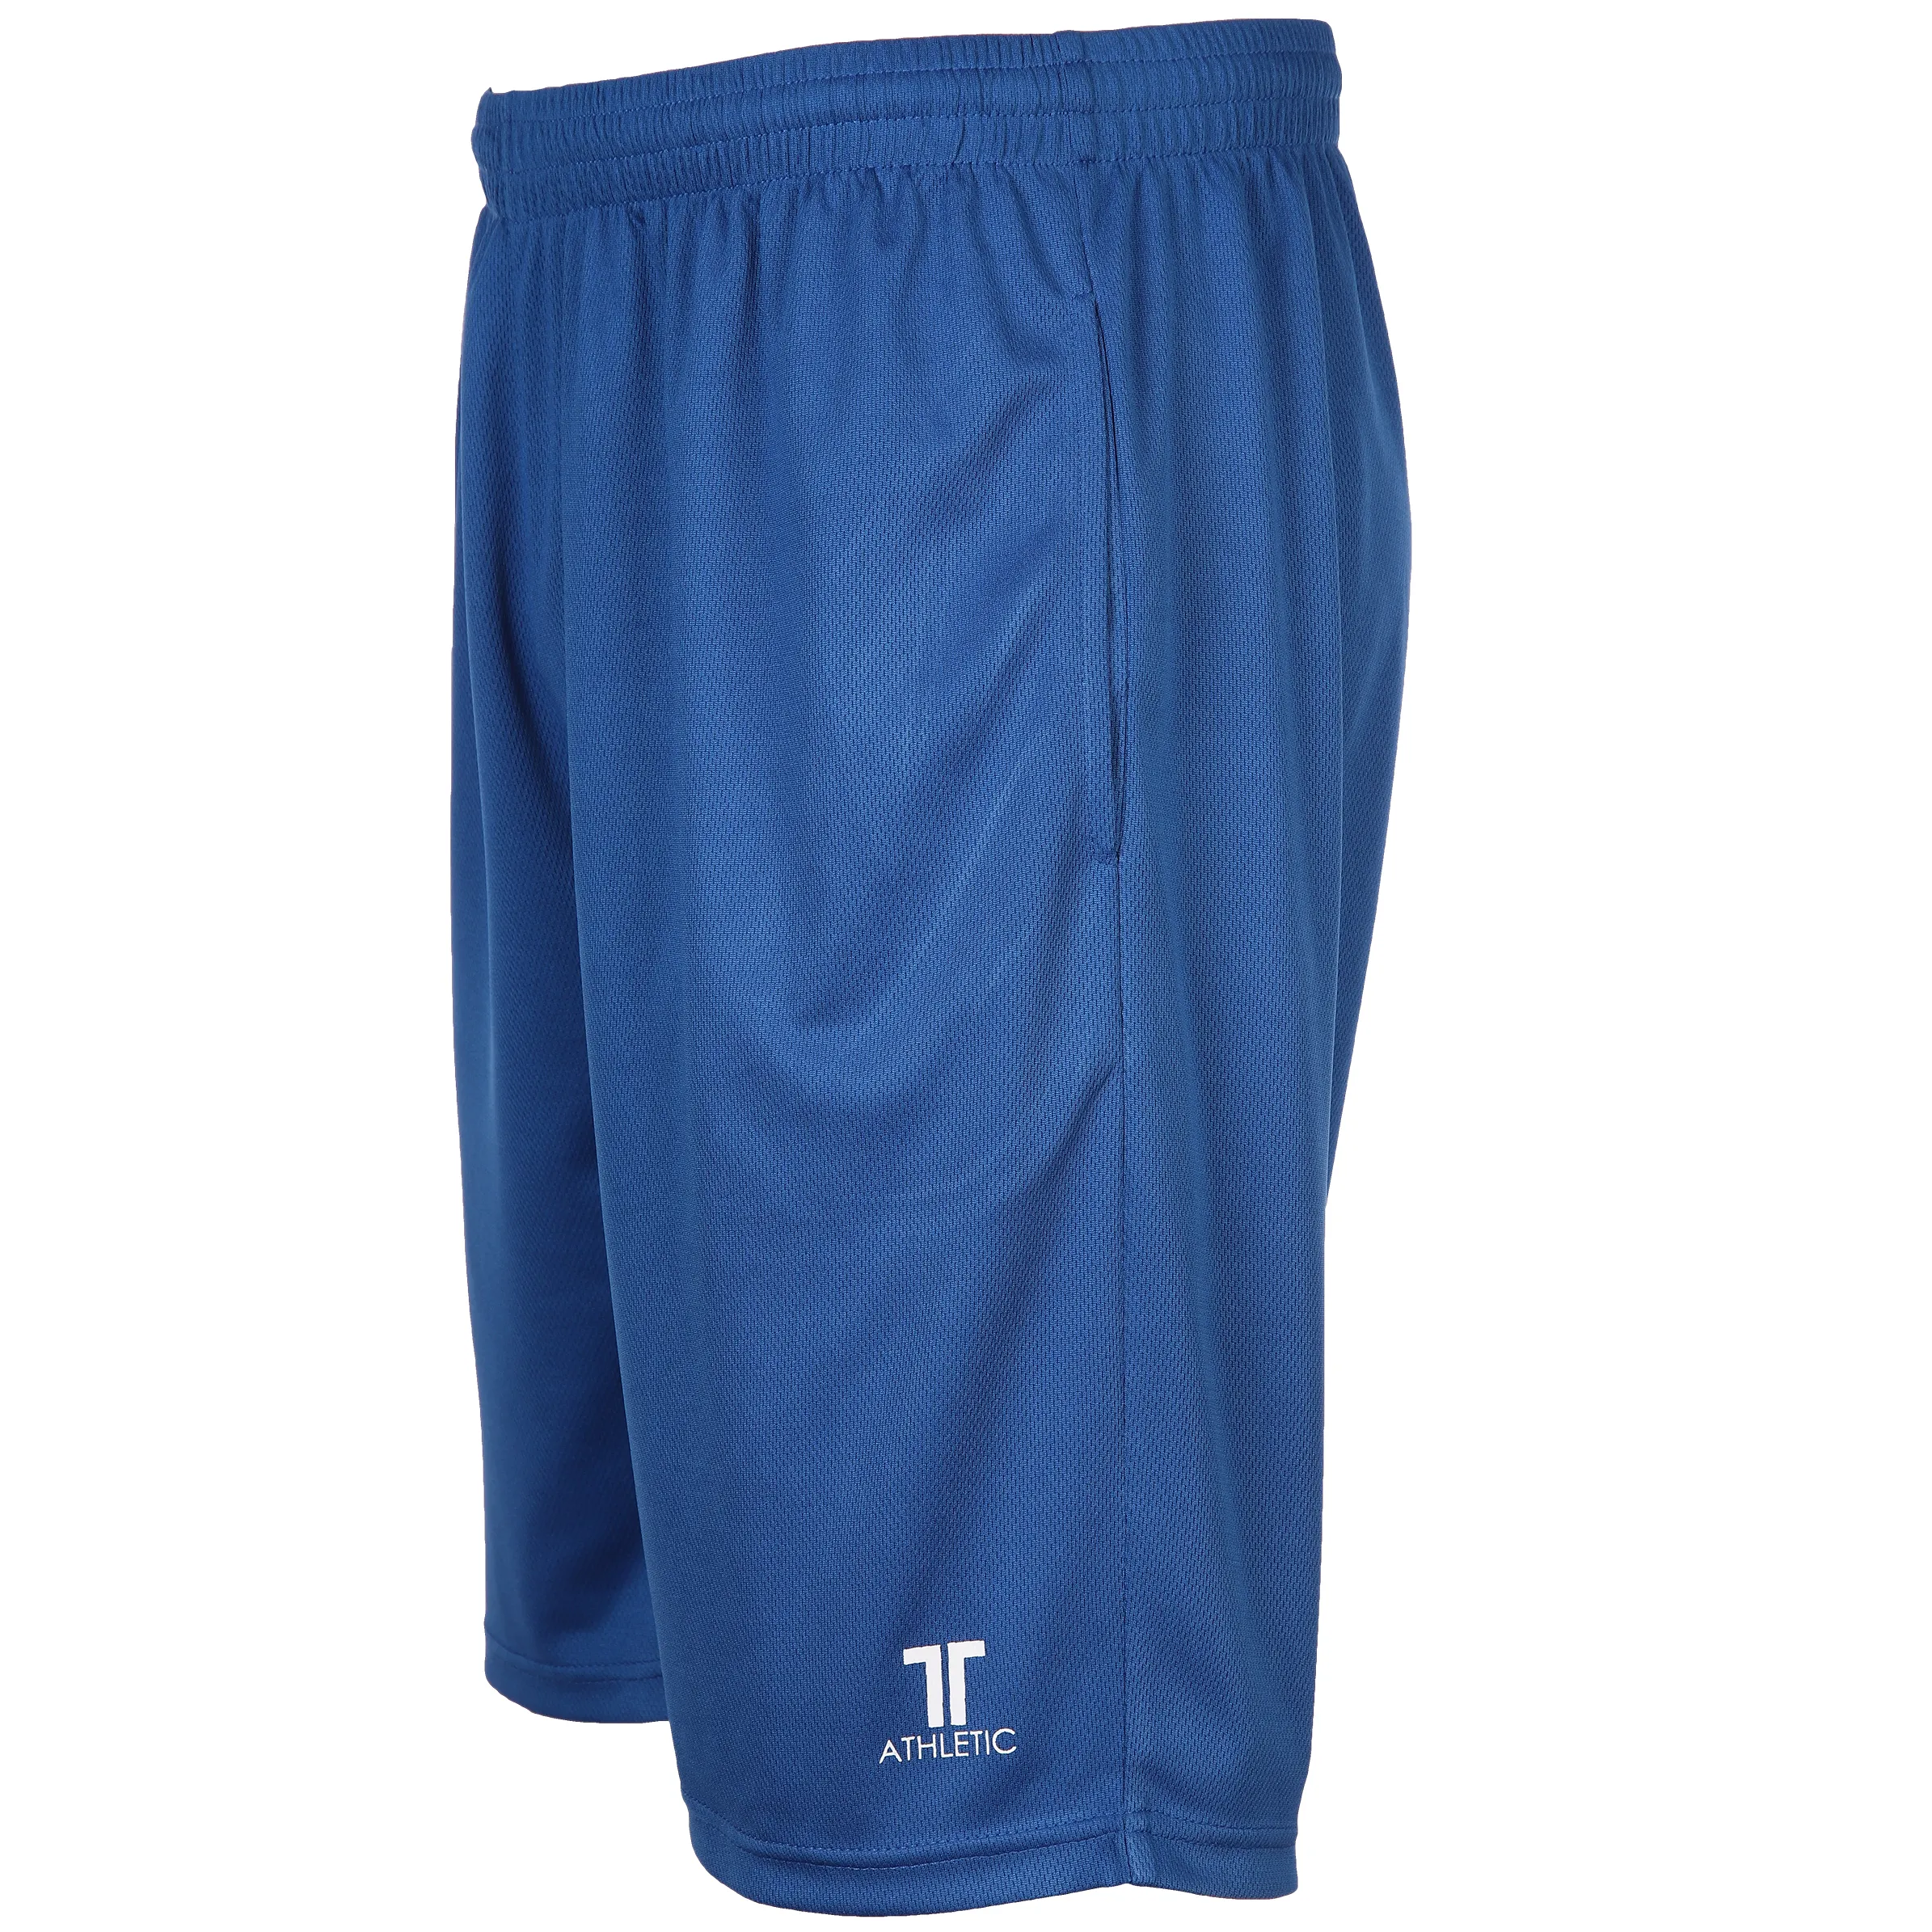 Athletic He-Sport Shorts Blau 882690 ROYAL BLUE 3